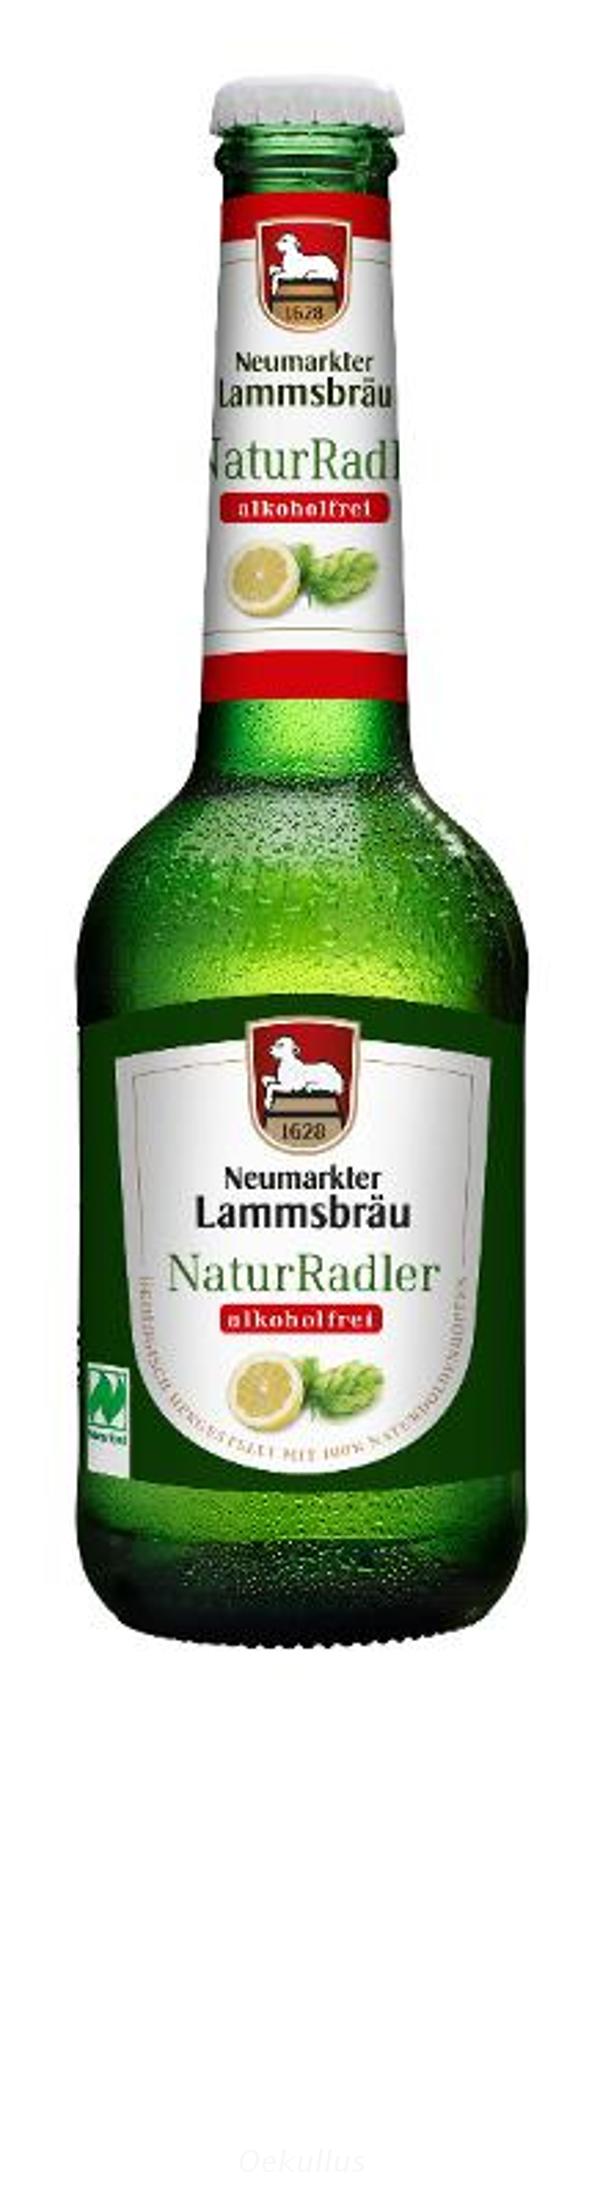 Produktfoto zu Lammsbräu NaturRadler alkoholfrei